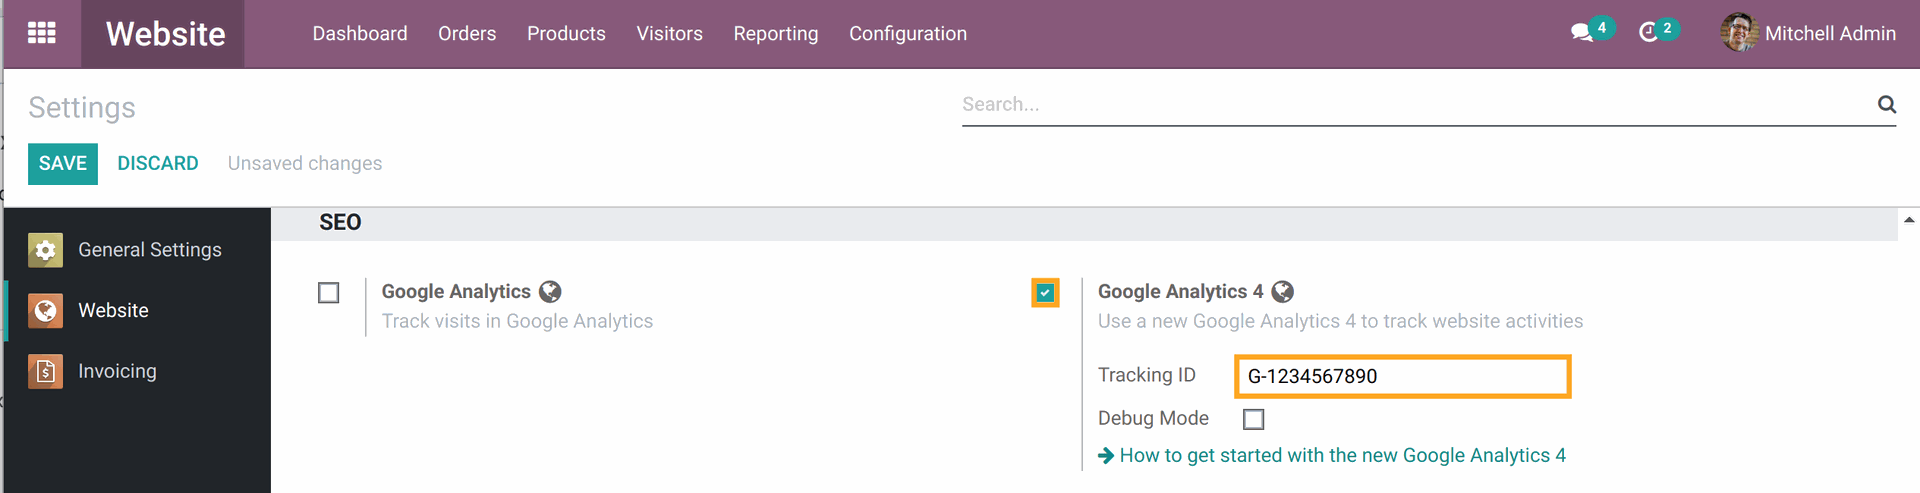 Odoo 14.0 Google Analytics 4 Global Site Tag (gtag.js) configuration